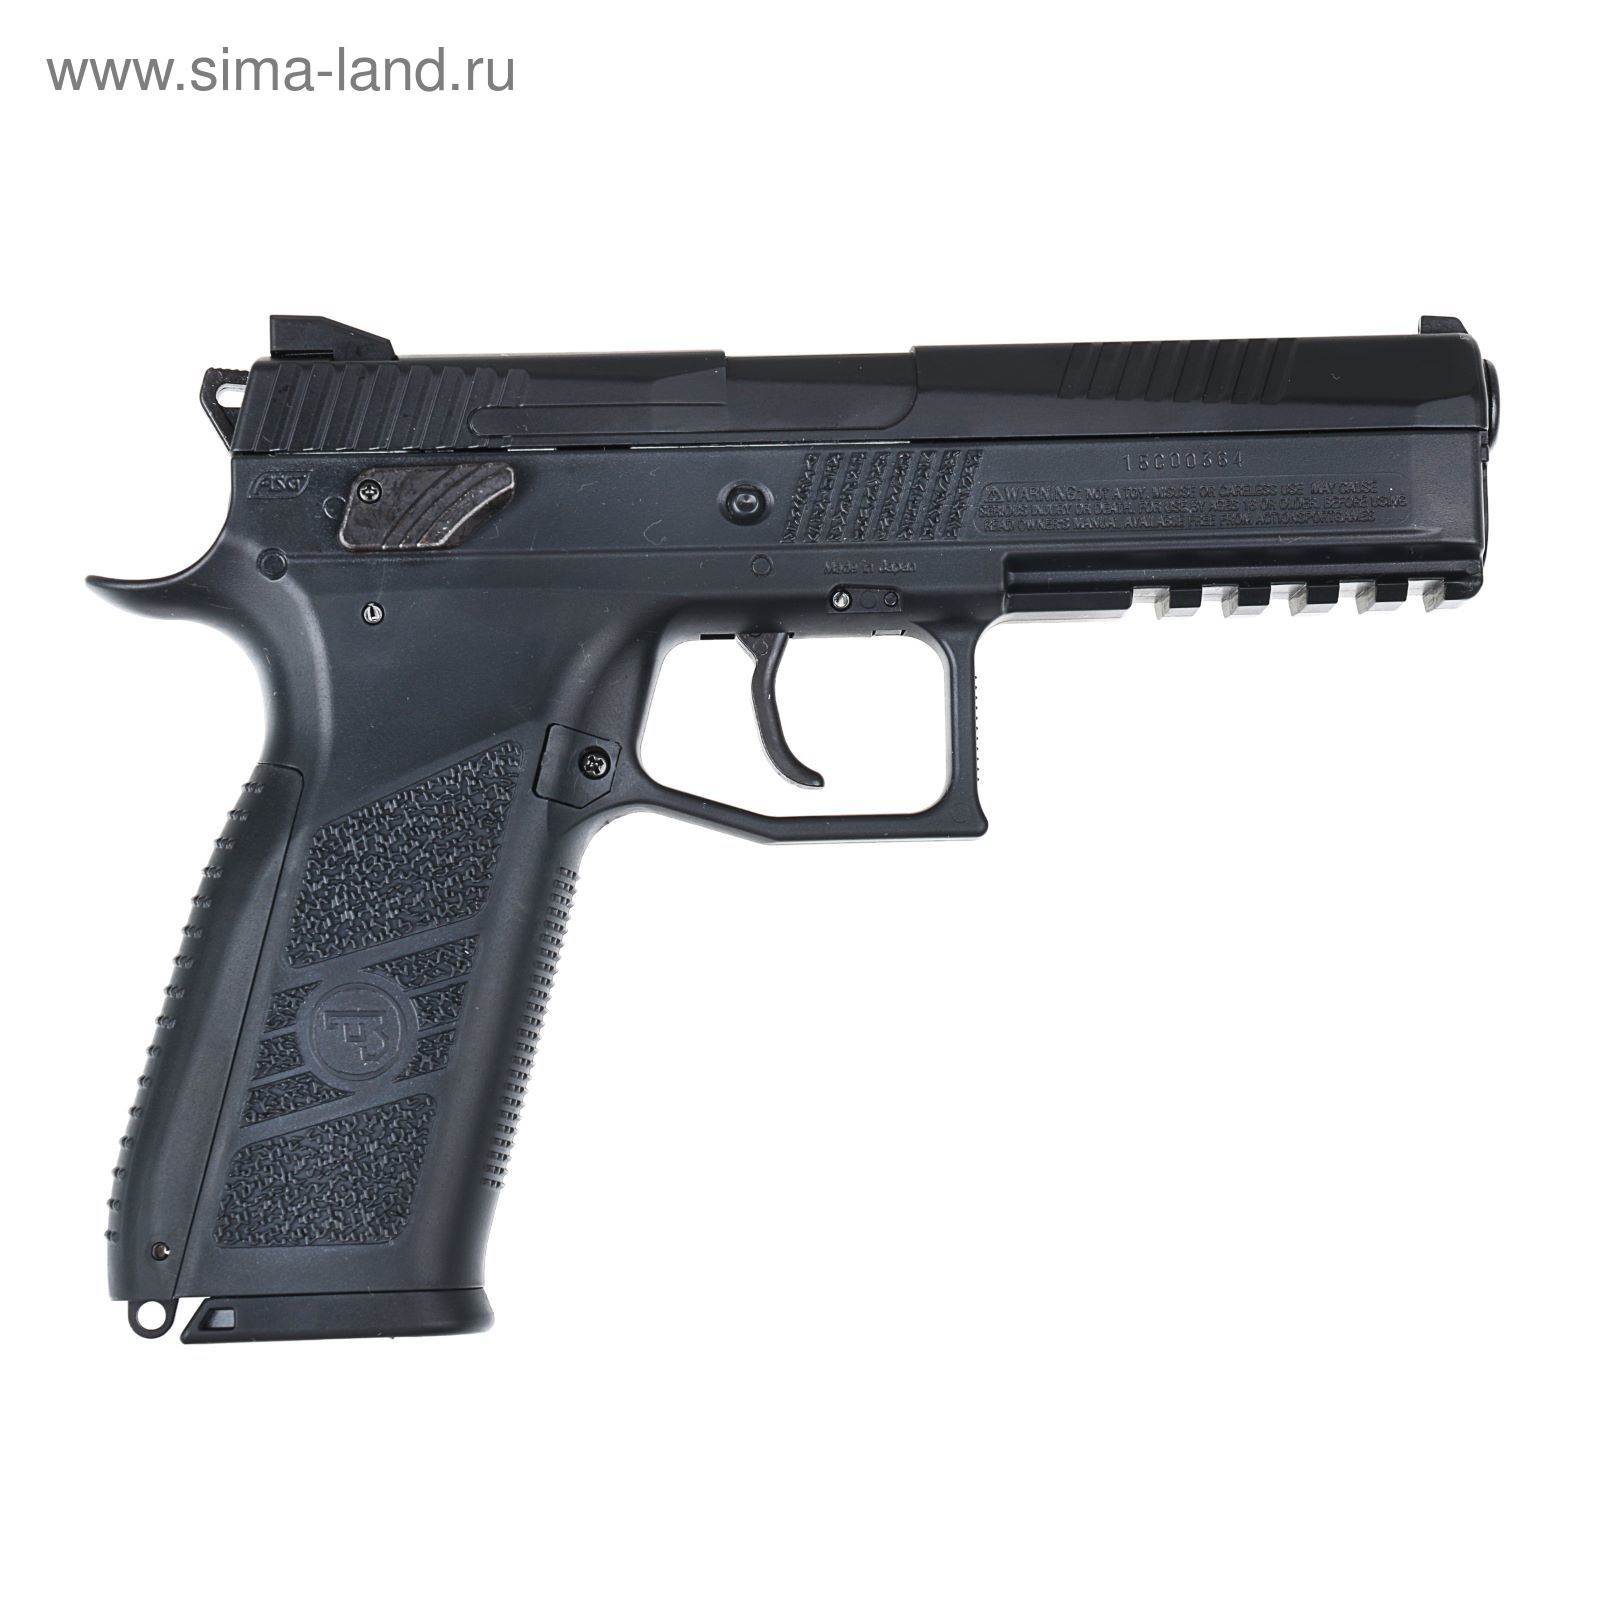 Пистолет пневматический CZ P-09 Duty (17537) пулевой,  blowback, калибр  4,5 мм